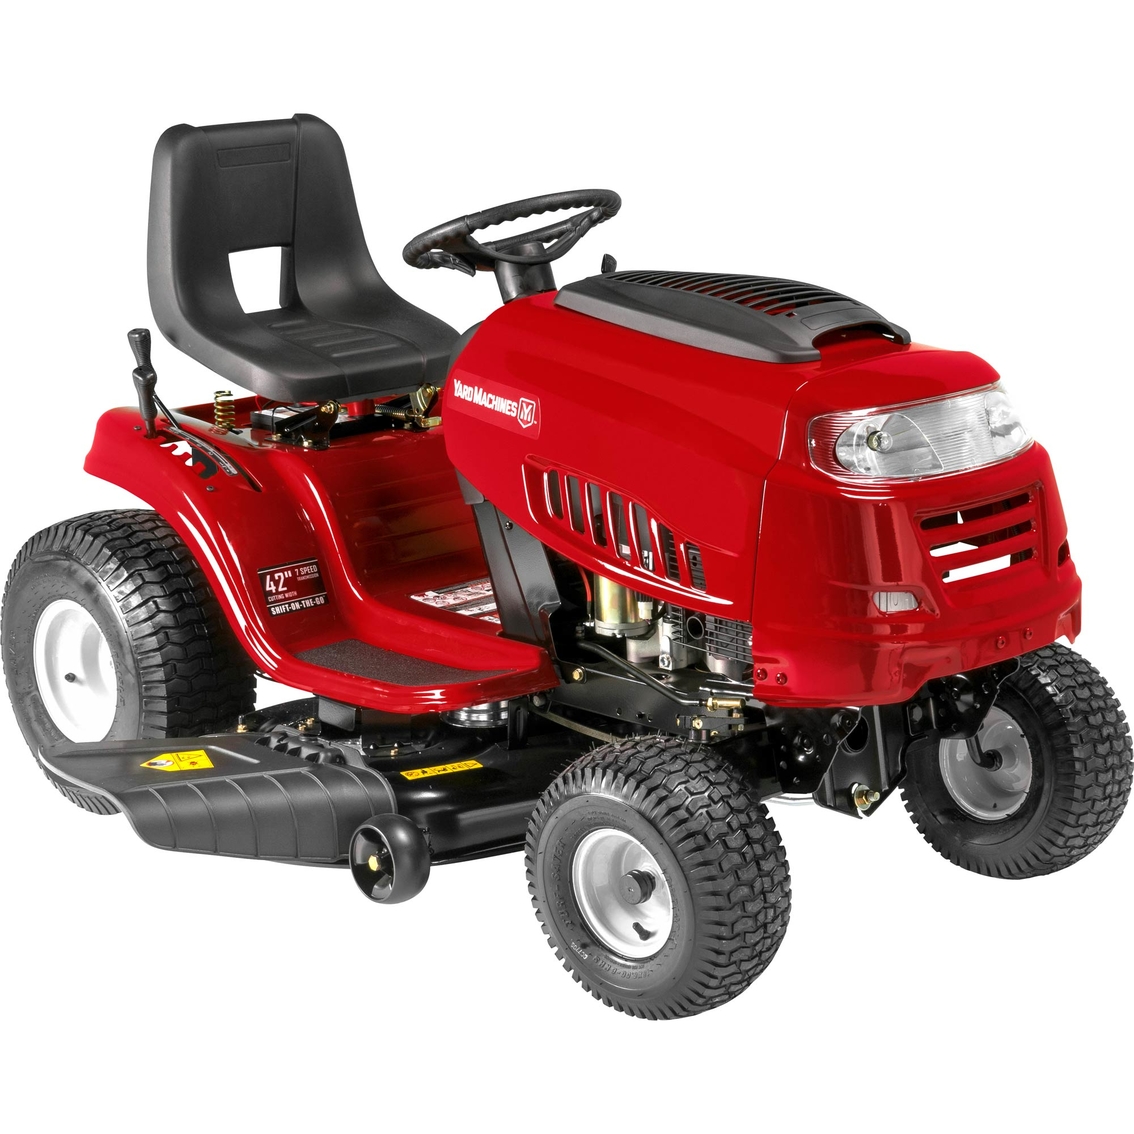 yard-machine-42-inch-riding-lawn-mower-my-xxx-hot-girl